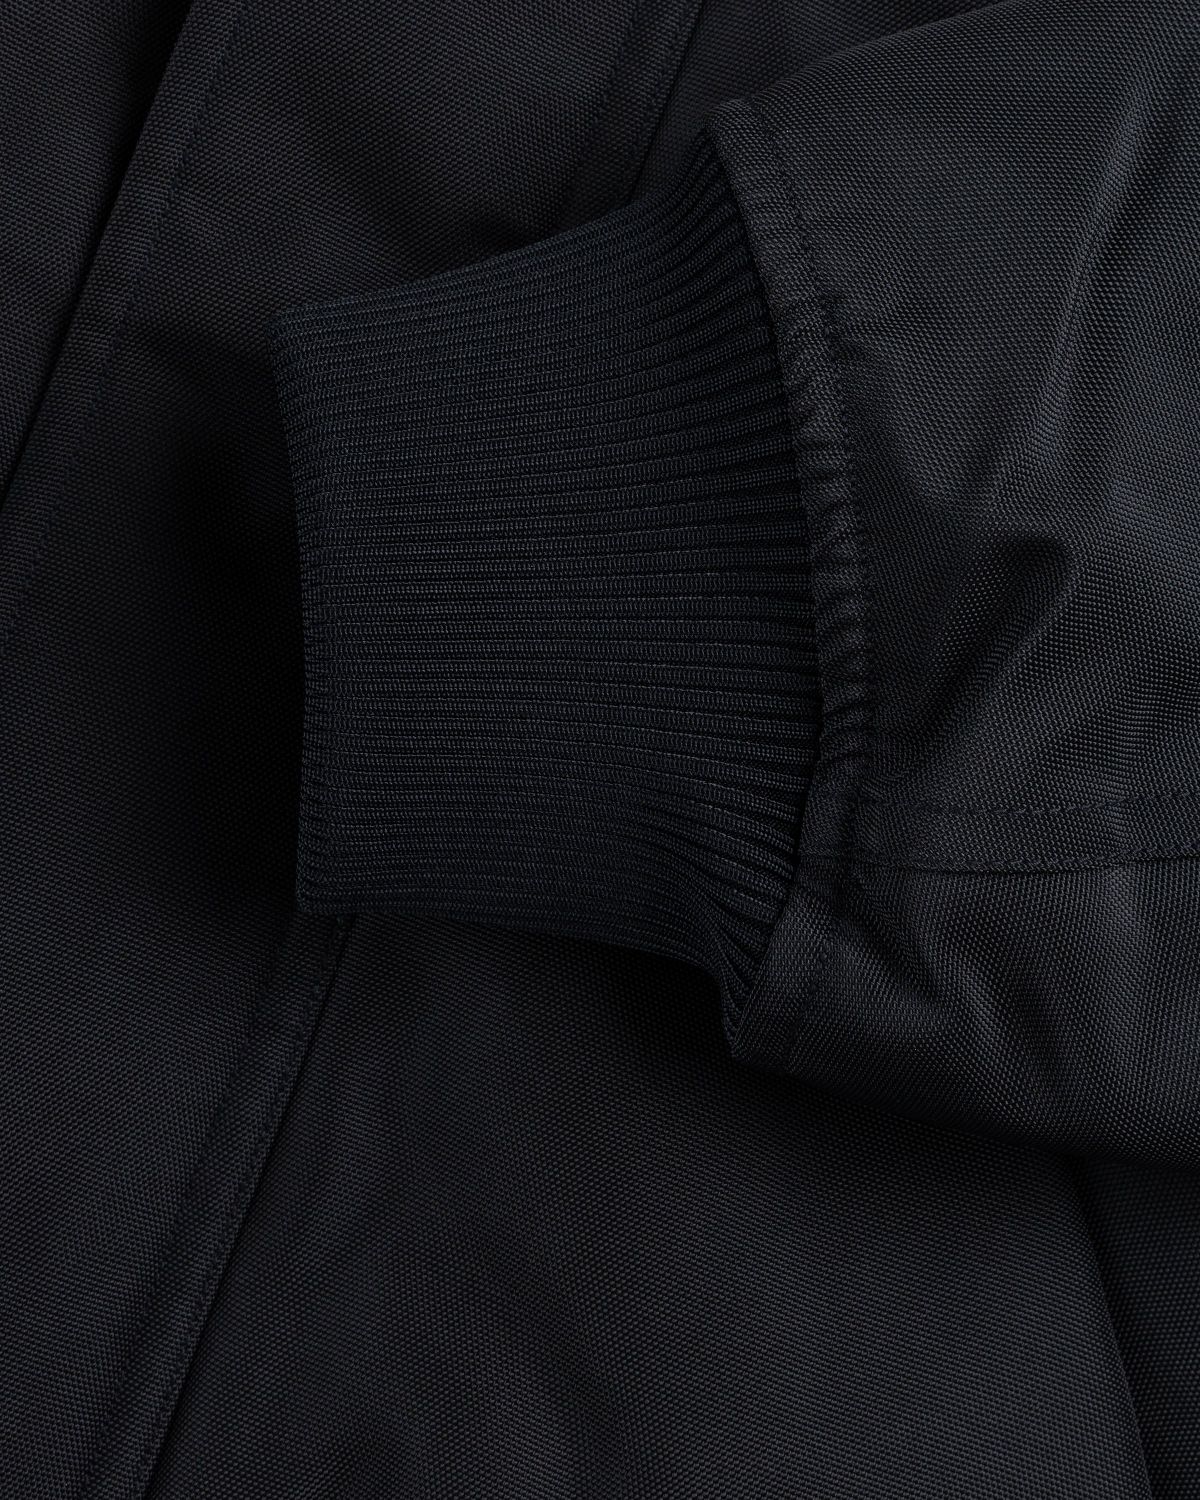 Acne Studios – Shearling Collar Jacket Black - Outerwear - Black - Image 5